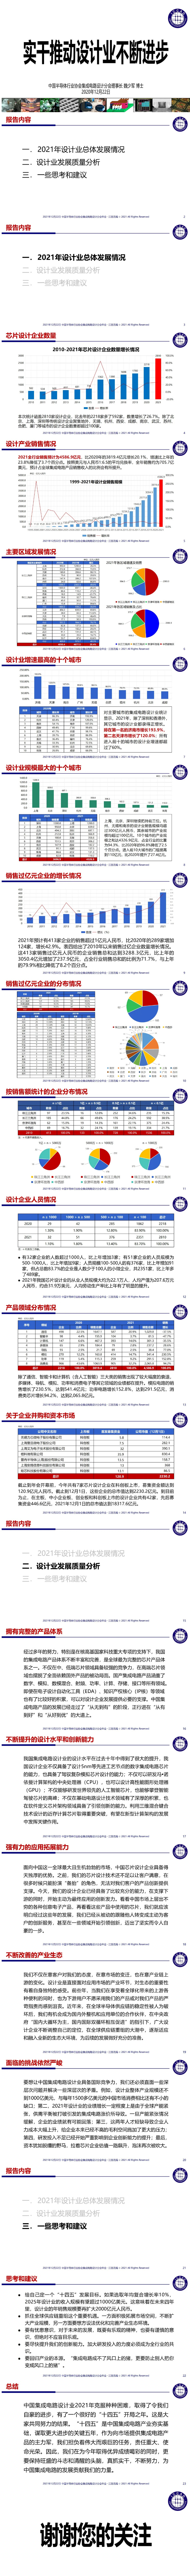 ICCAD-2021魏少军：中国高端芯片不再全面依赖国外产品-(_附PPT).jpg